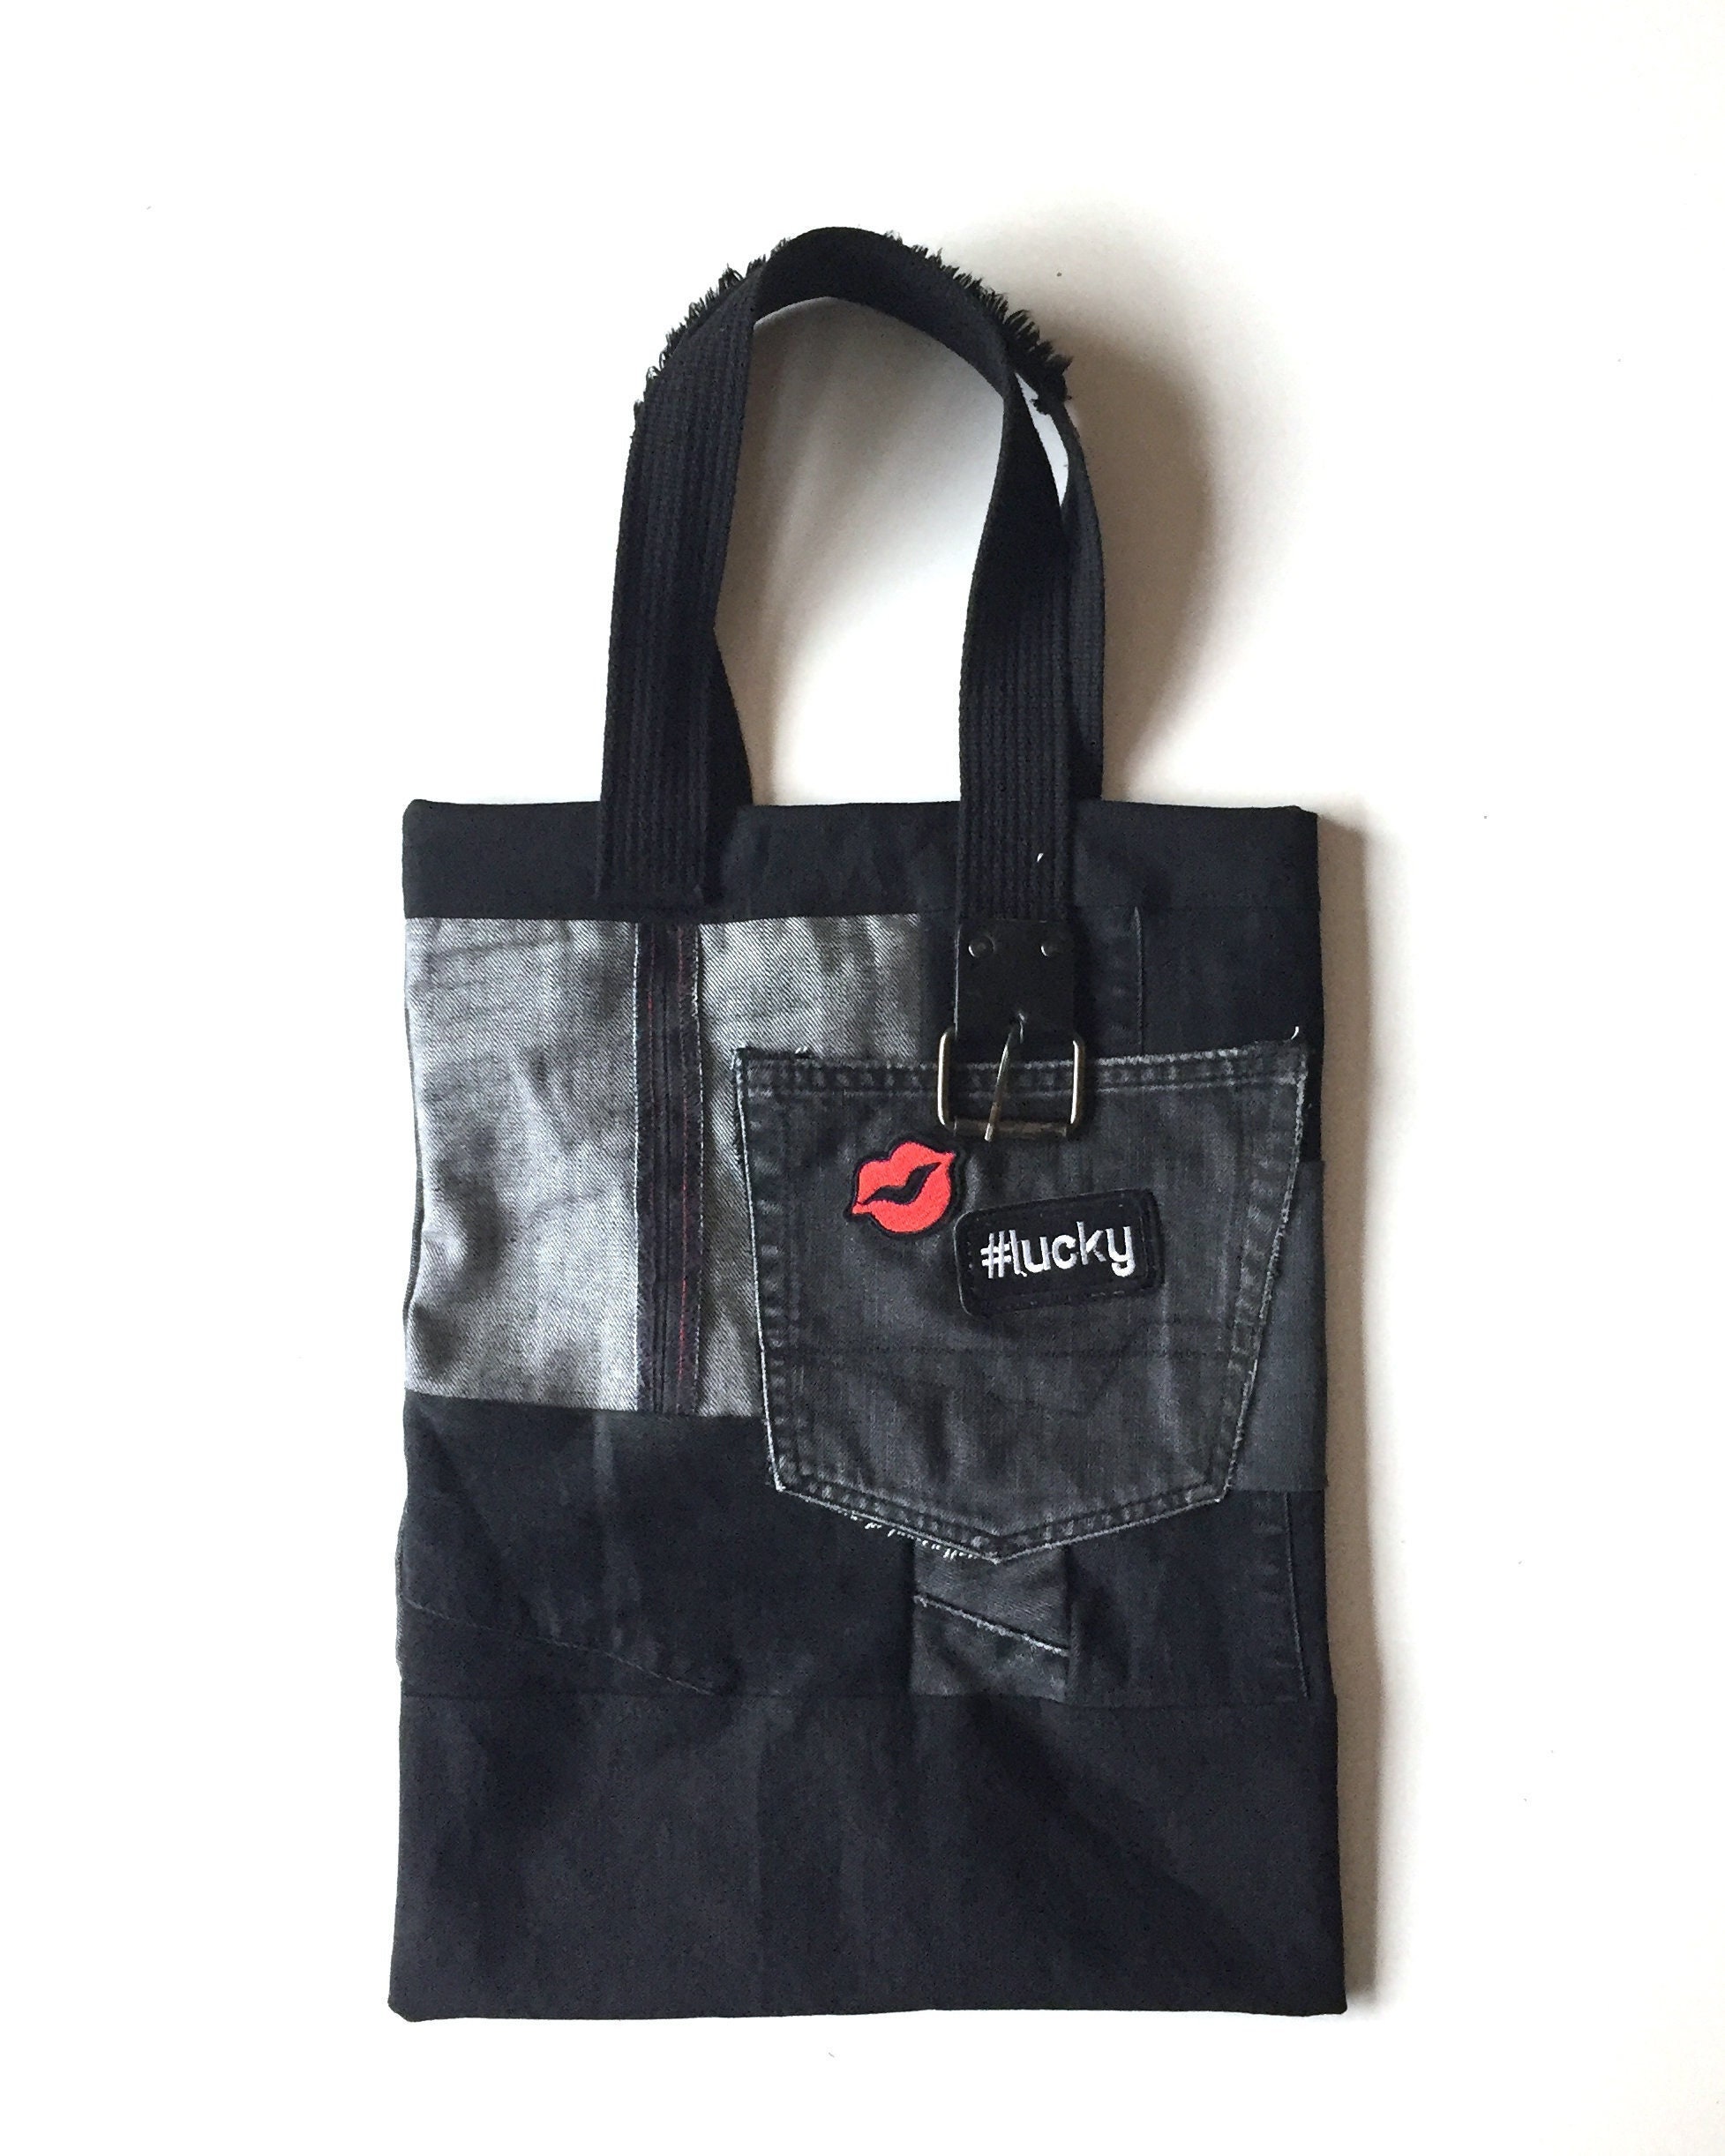 Grunge Punk Rock Goth Black Denim Bag Handmade Repurposed - Etsy Australia